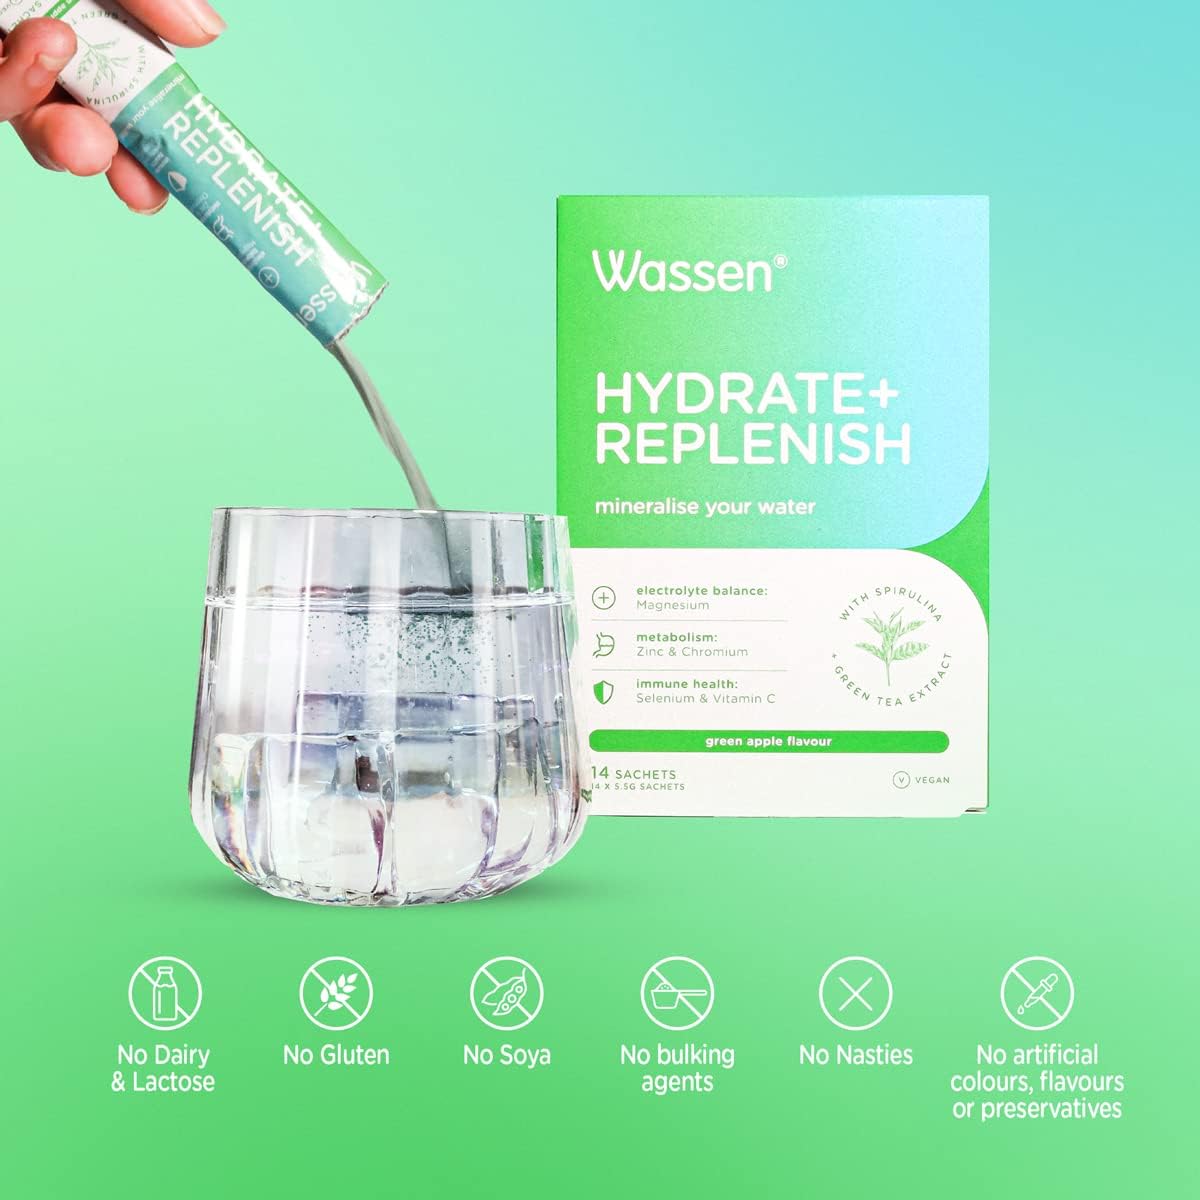 Wassen Hydrate + Replenish - Electrolyte Balance - Magnesium, Spirulina & Green Tea - Powder Supplement - 14 Sachets 0399